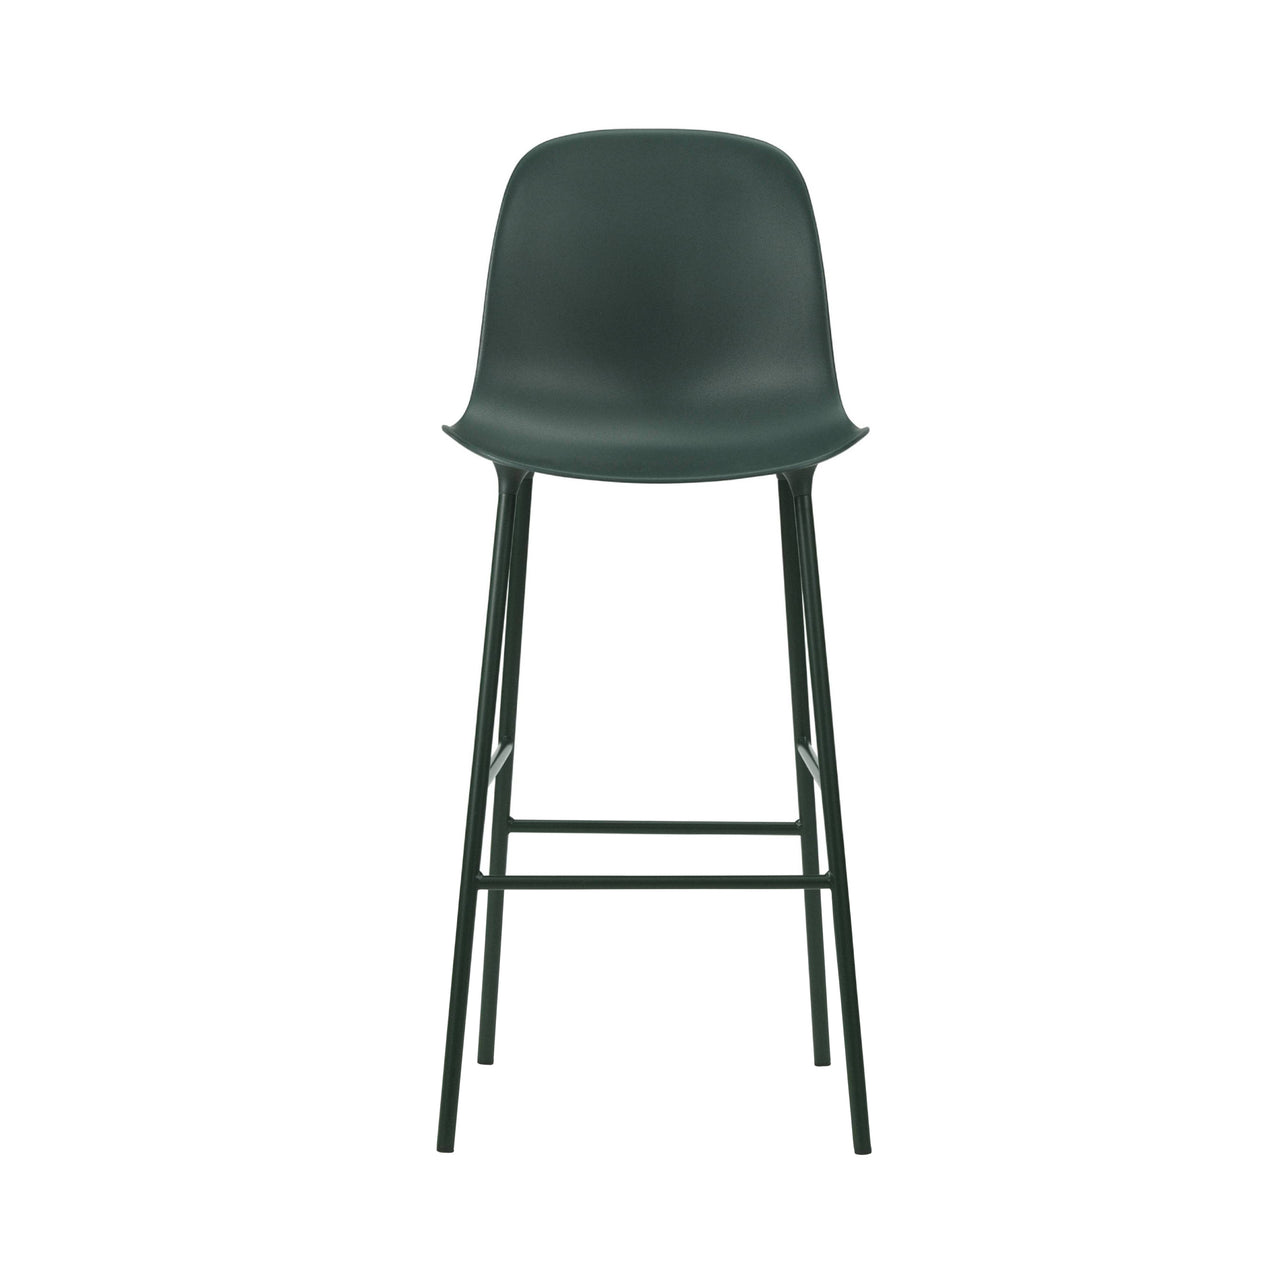 Form Bar + Counter Chair: Bar + Green